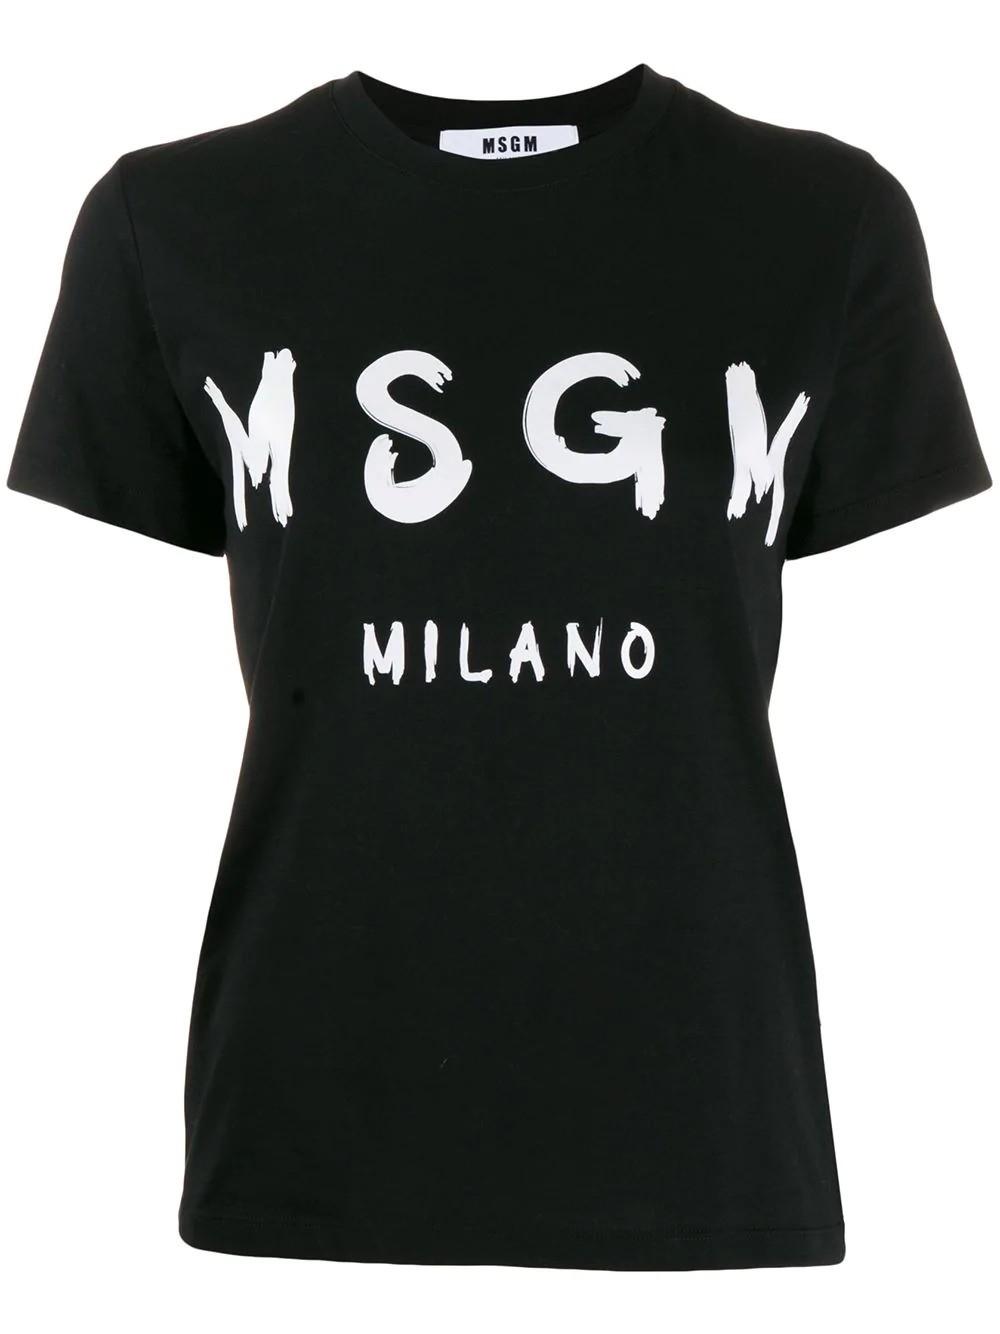 MSGM Cotton Milano Logo T-shirt in Black - Save 23% - Lyst